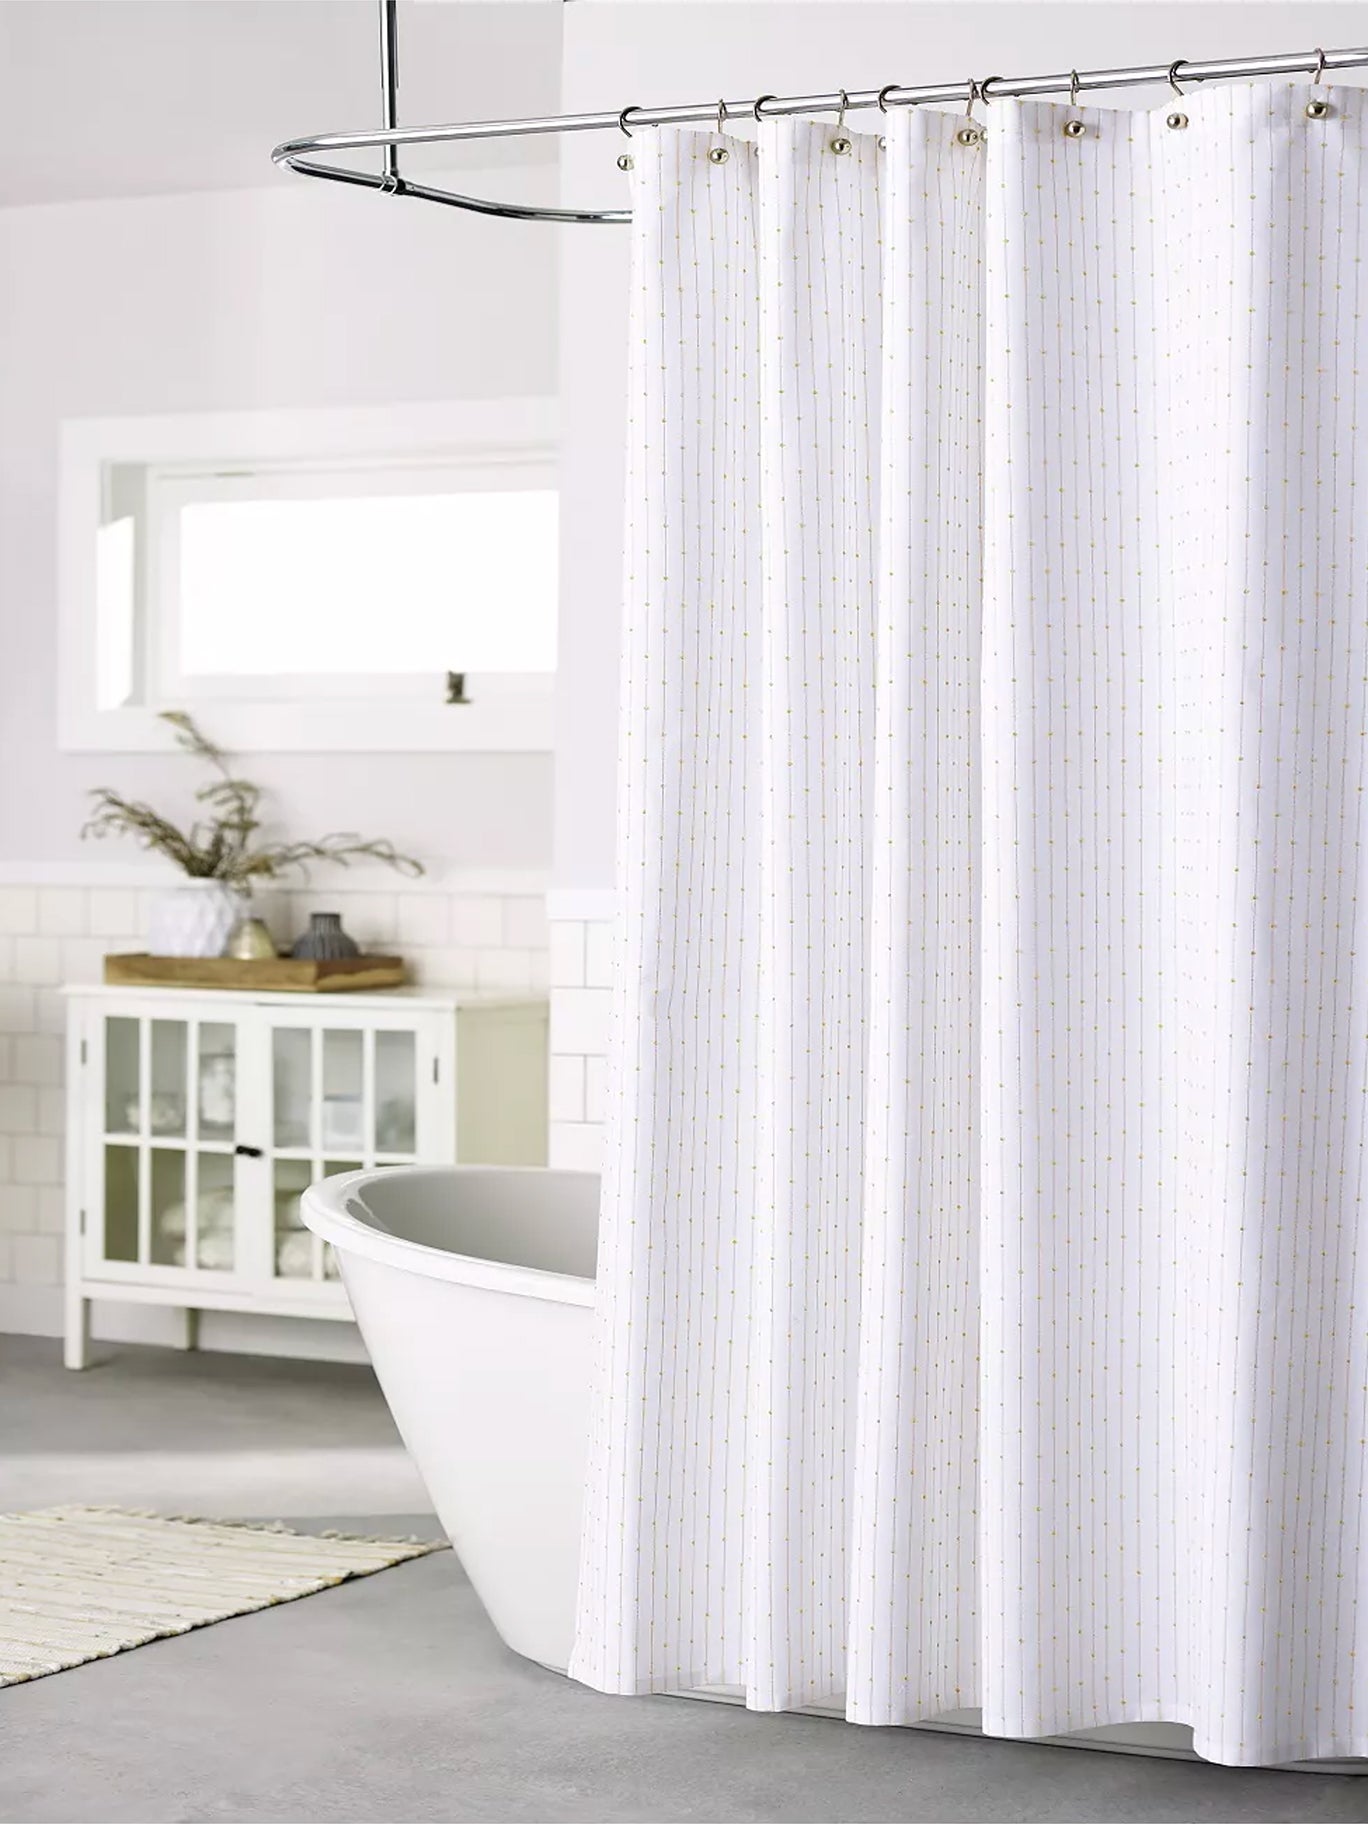 white bathroom with bathtub that has shower curtain